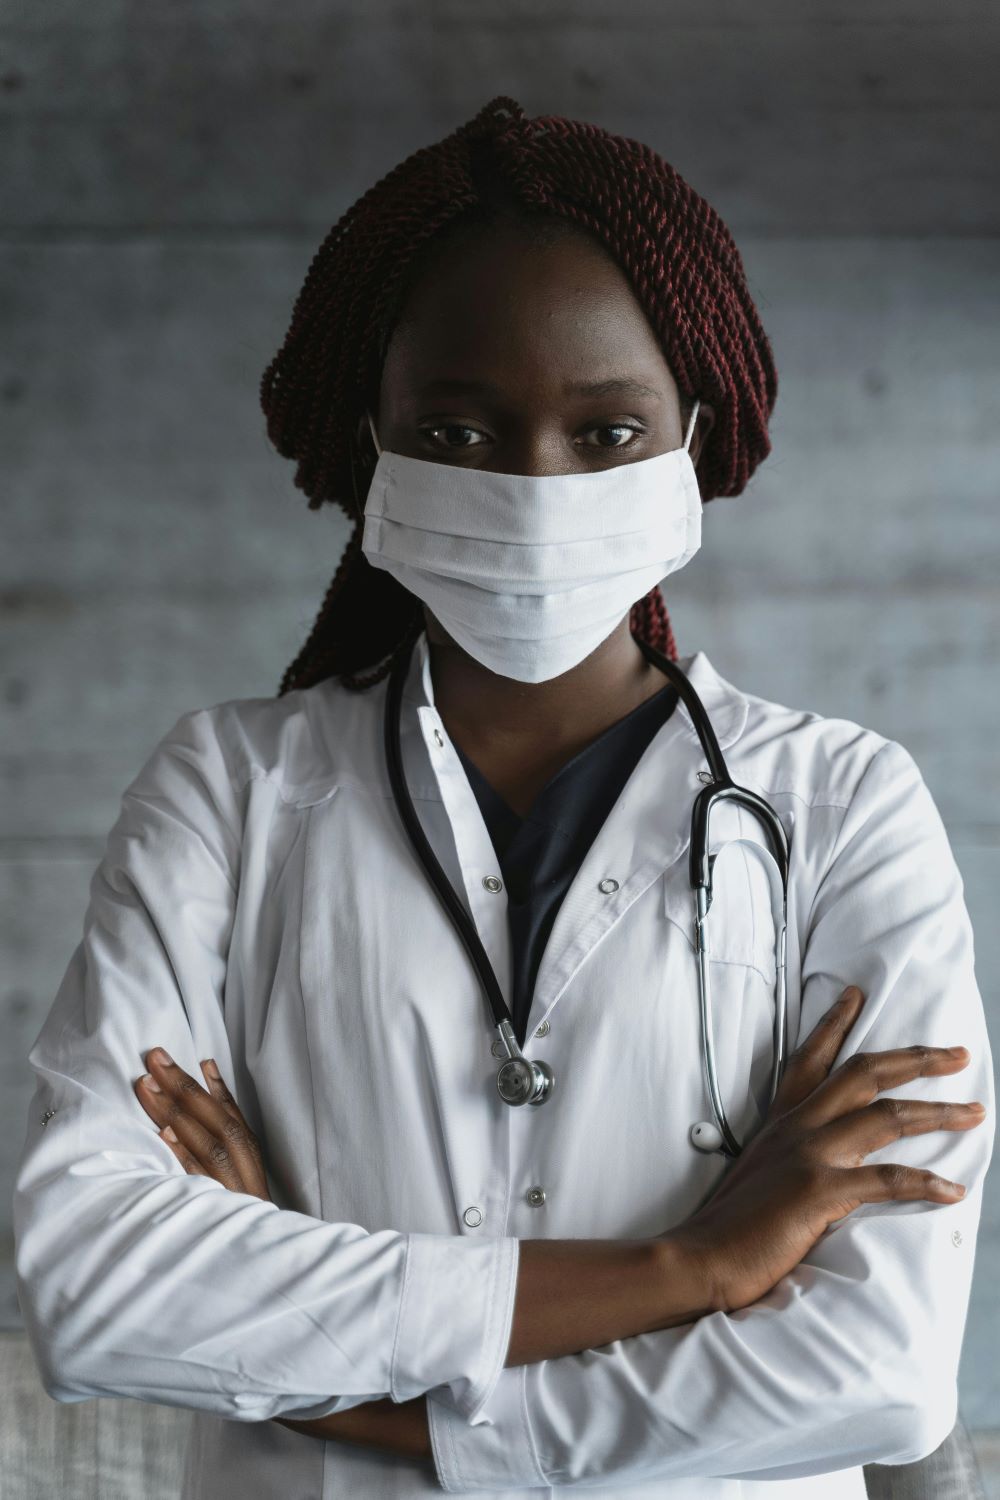 More Than 50% of Healthcare Professionals Report Racial Discrimination